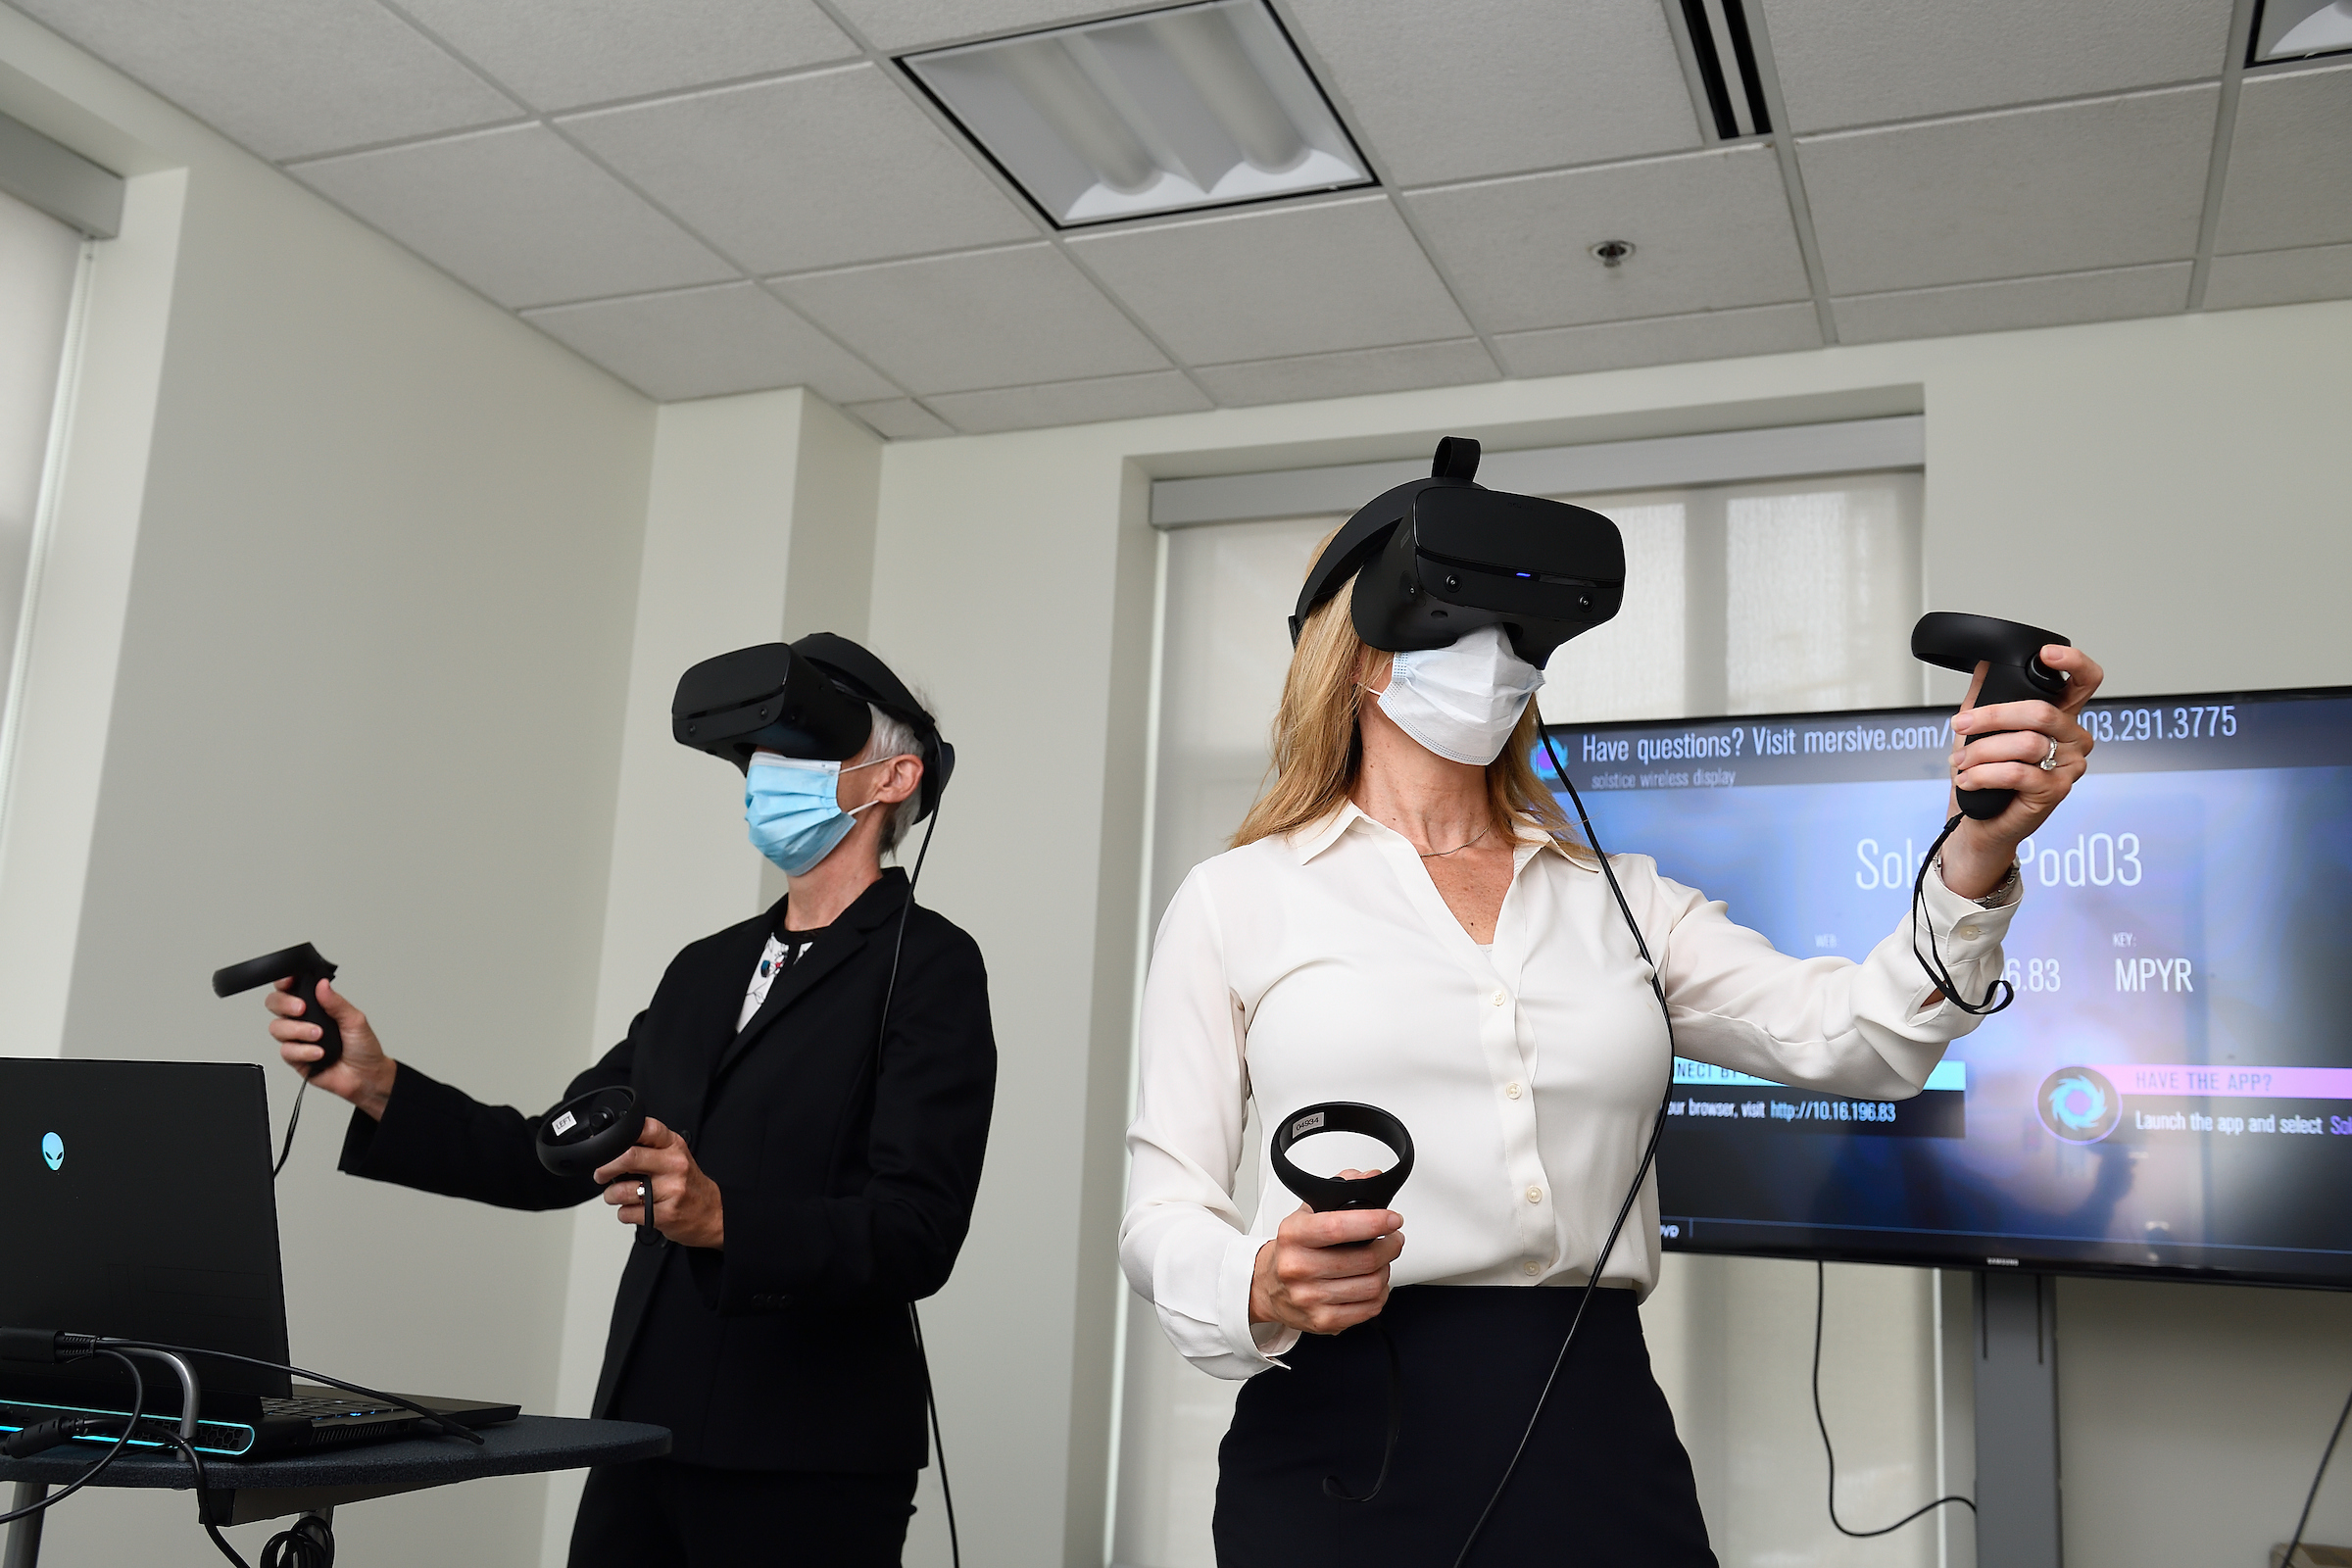 Amidst COVID-19, Virtual Reality Makes “Social Distancing” Simulation Possible